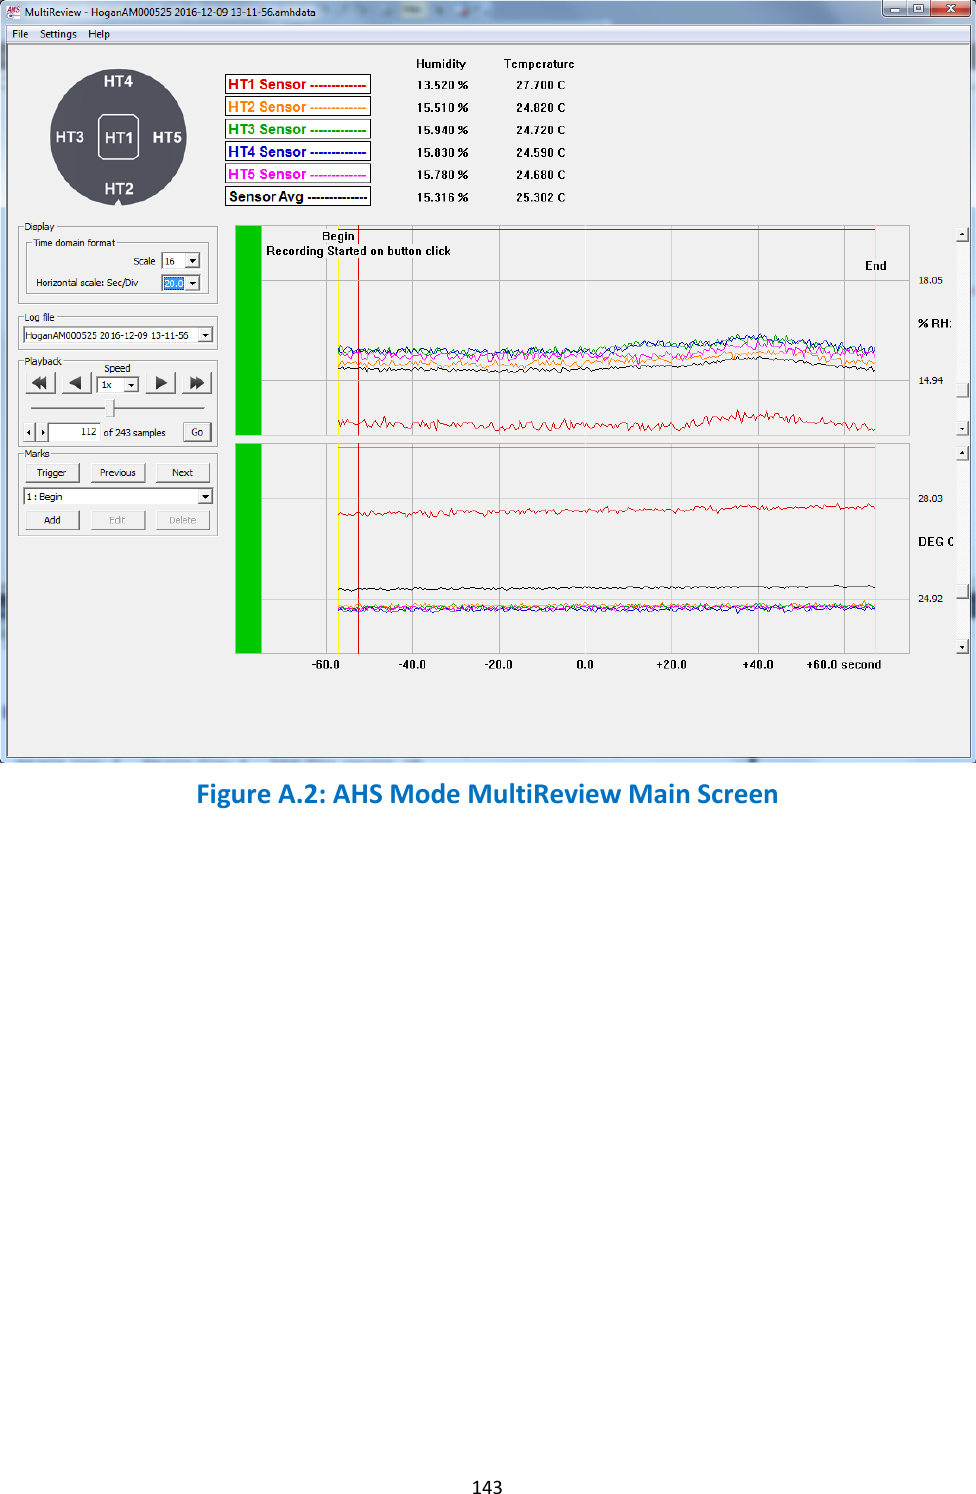   143  Figure A.2: AHS Mode MultiReview Main Screen          